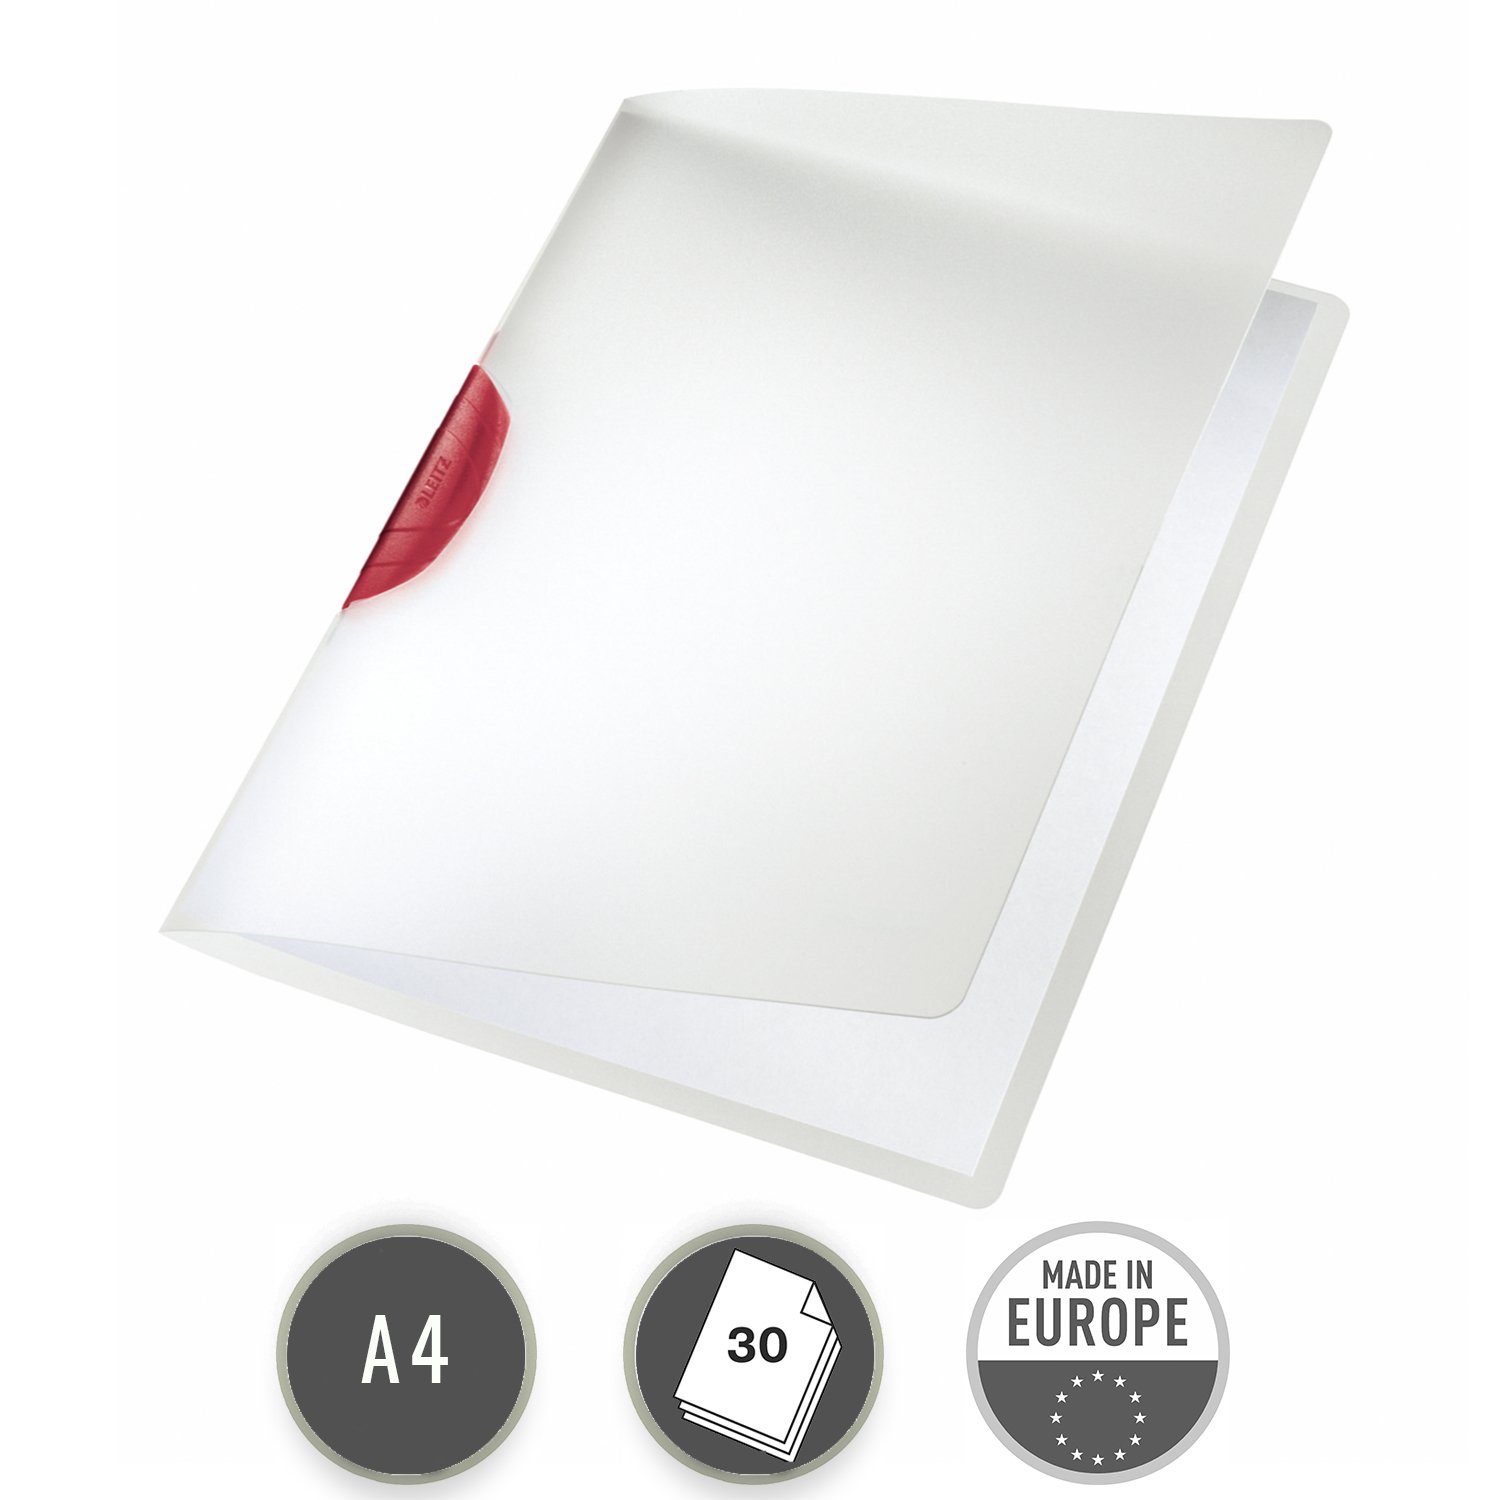 Schulheft Blatt hoher 30 zu g/m), Klemmkraft LEITZ ColorClip Clip f Hefter, rot mit bis (80